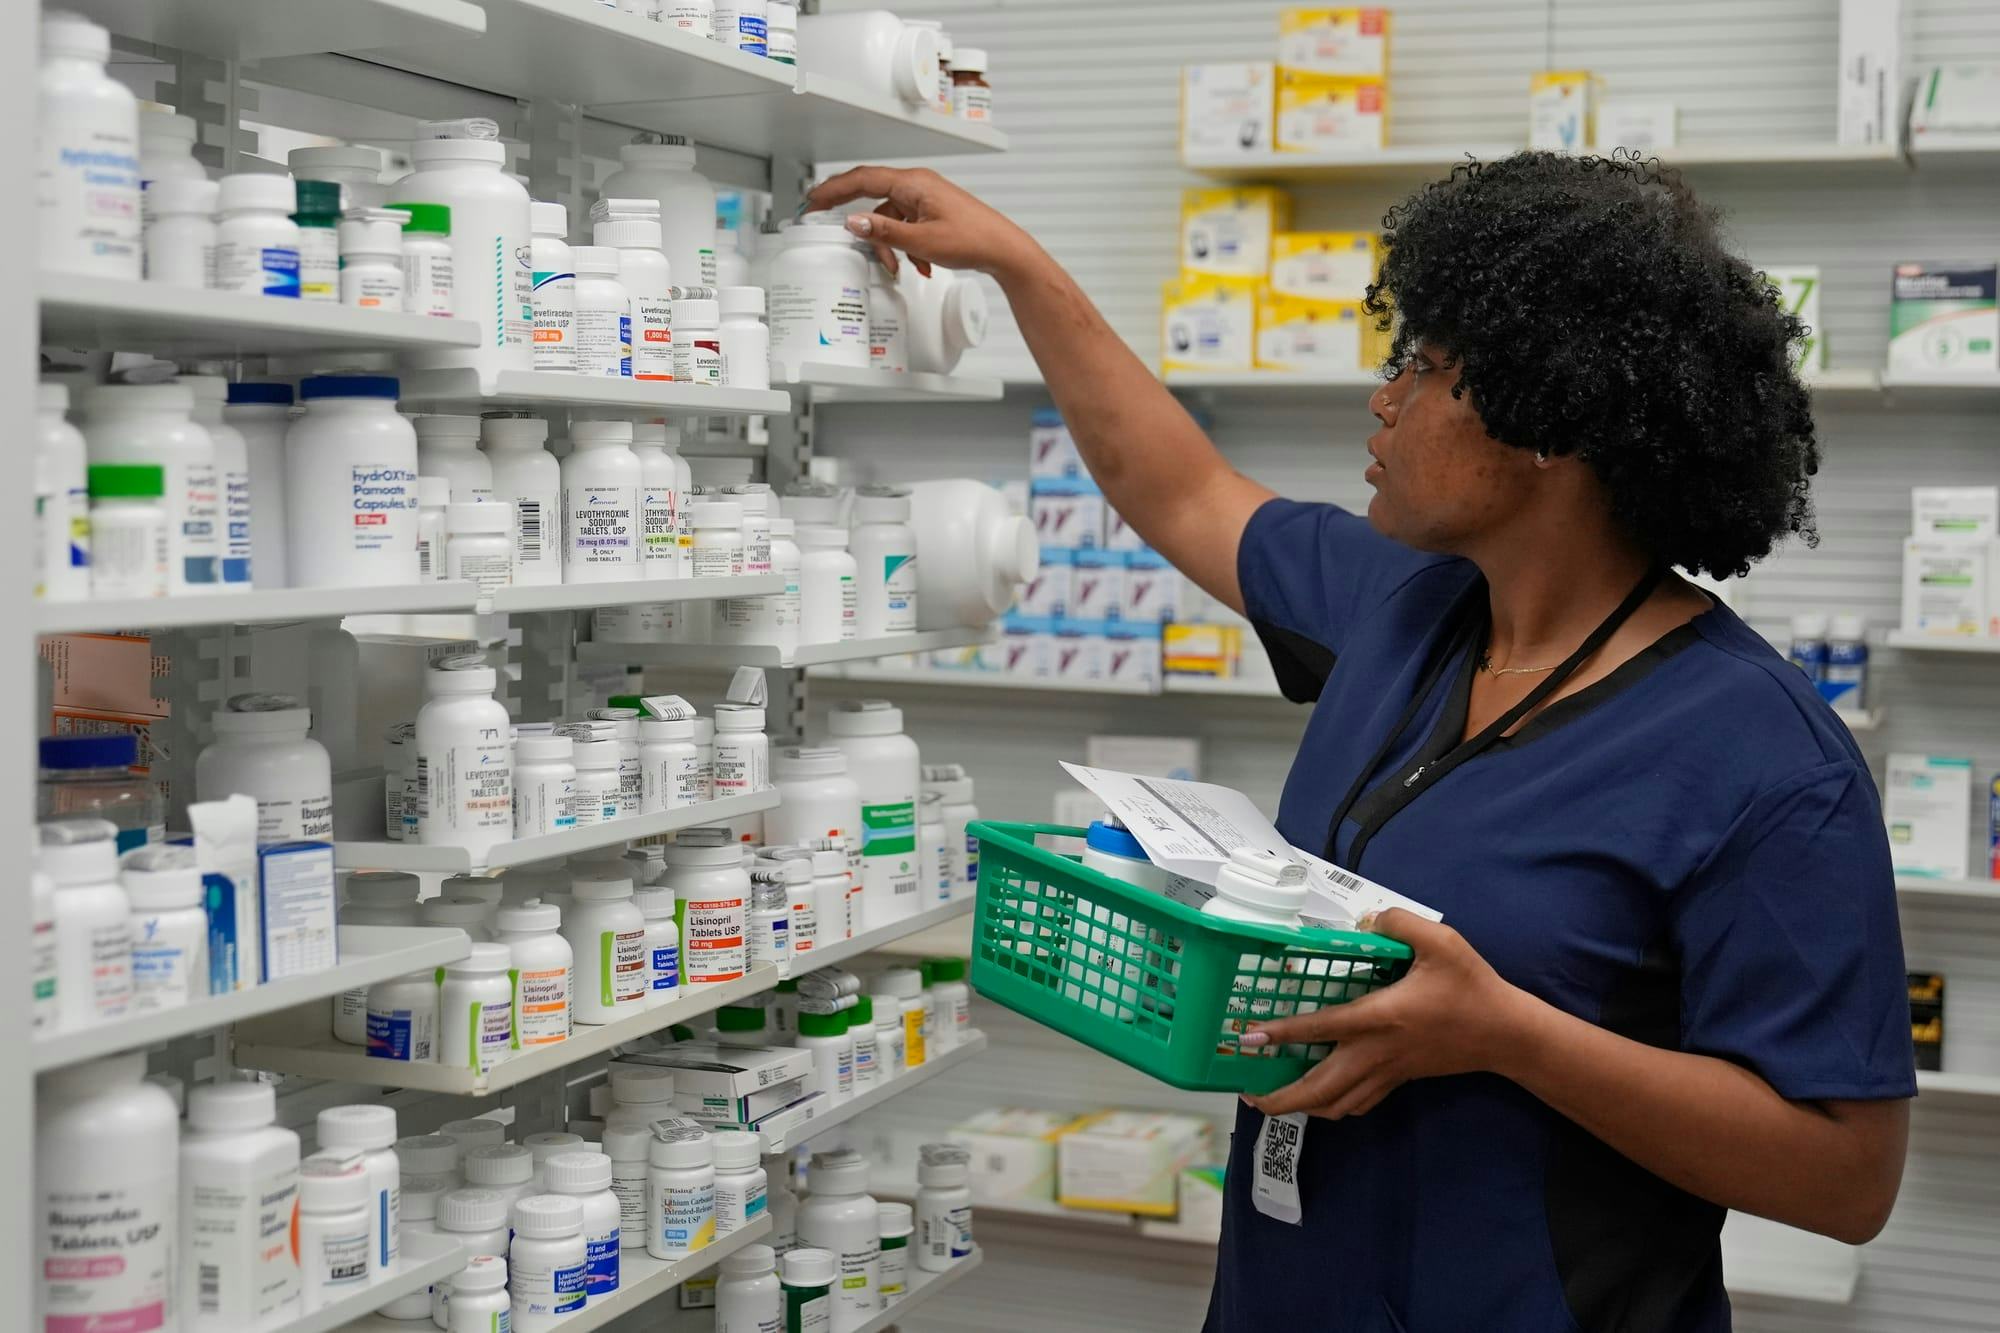 An employee places drugs on a shelf inside a pharmacy.